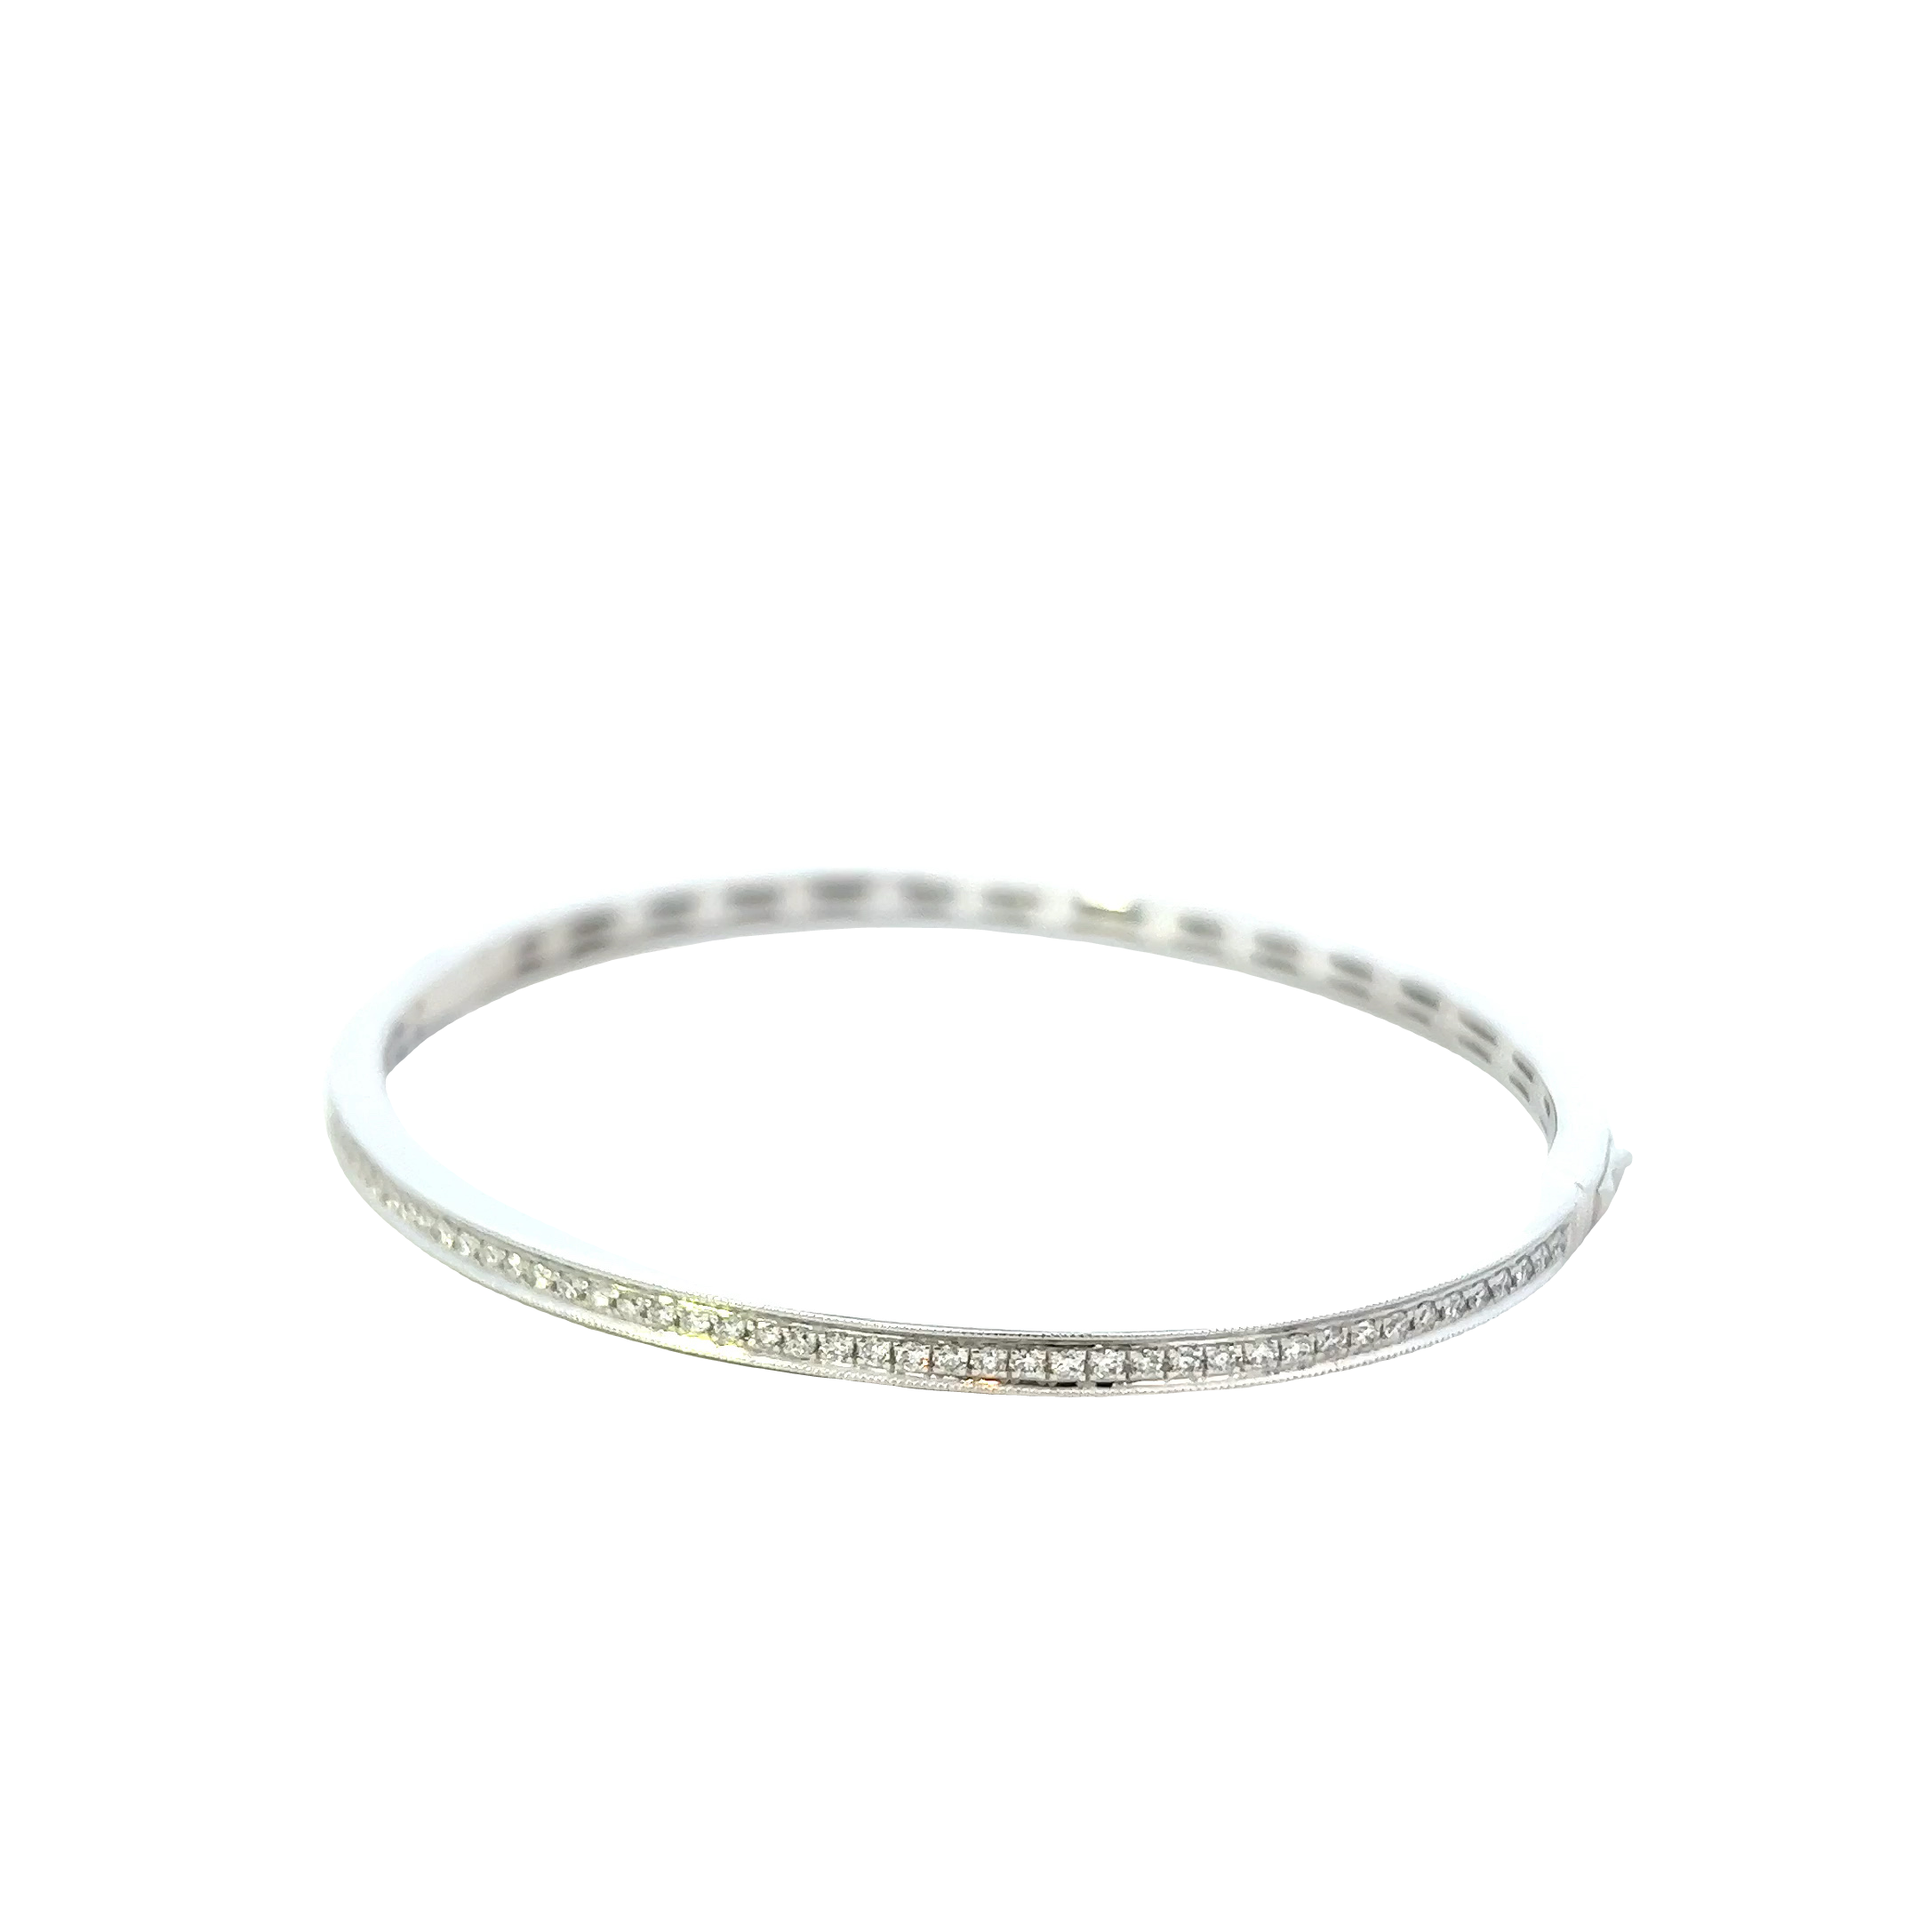 14KT White Gold Round Cut Diamond Bangle With Filigree Design